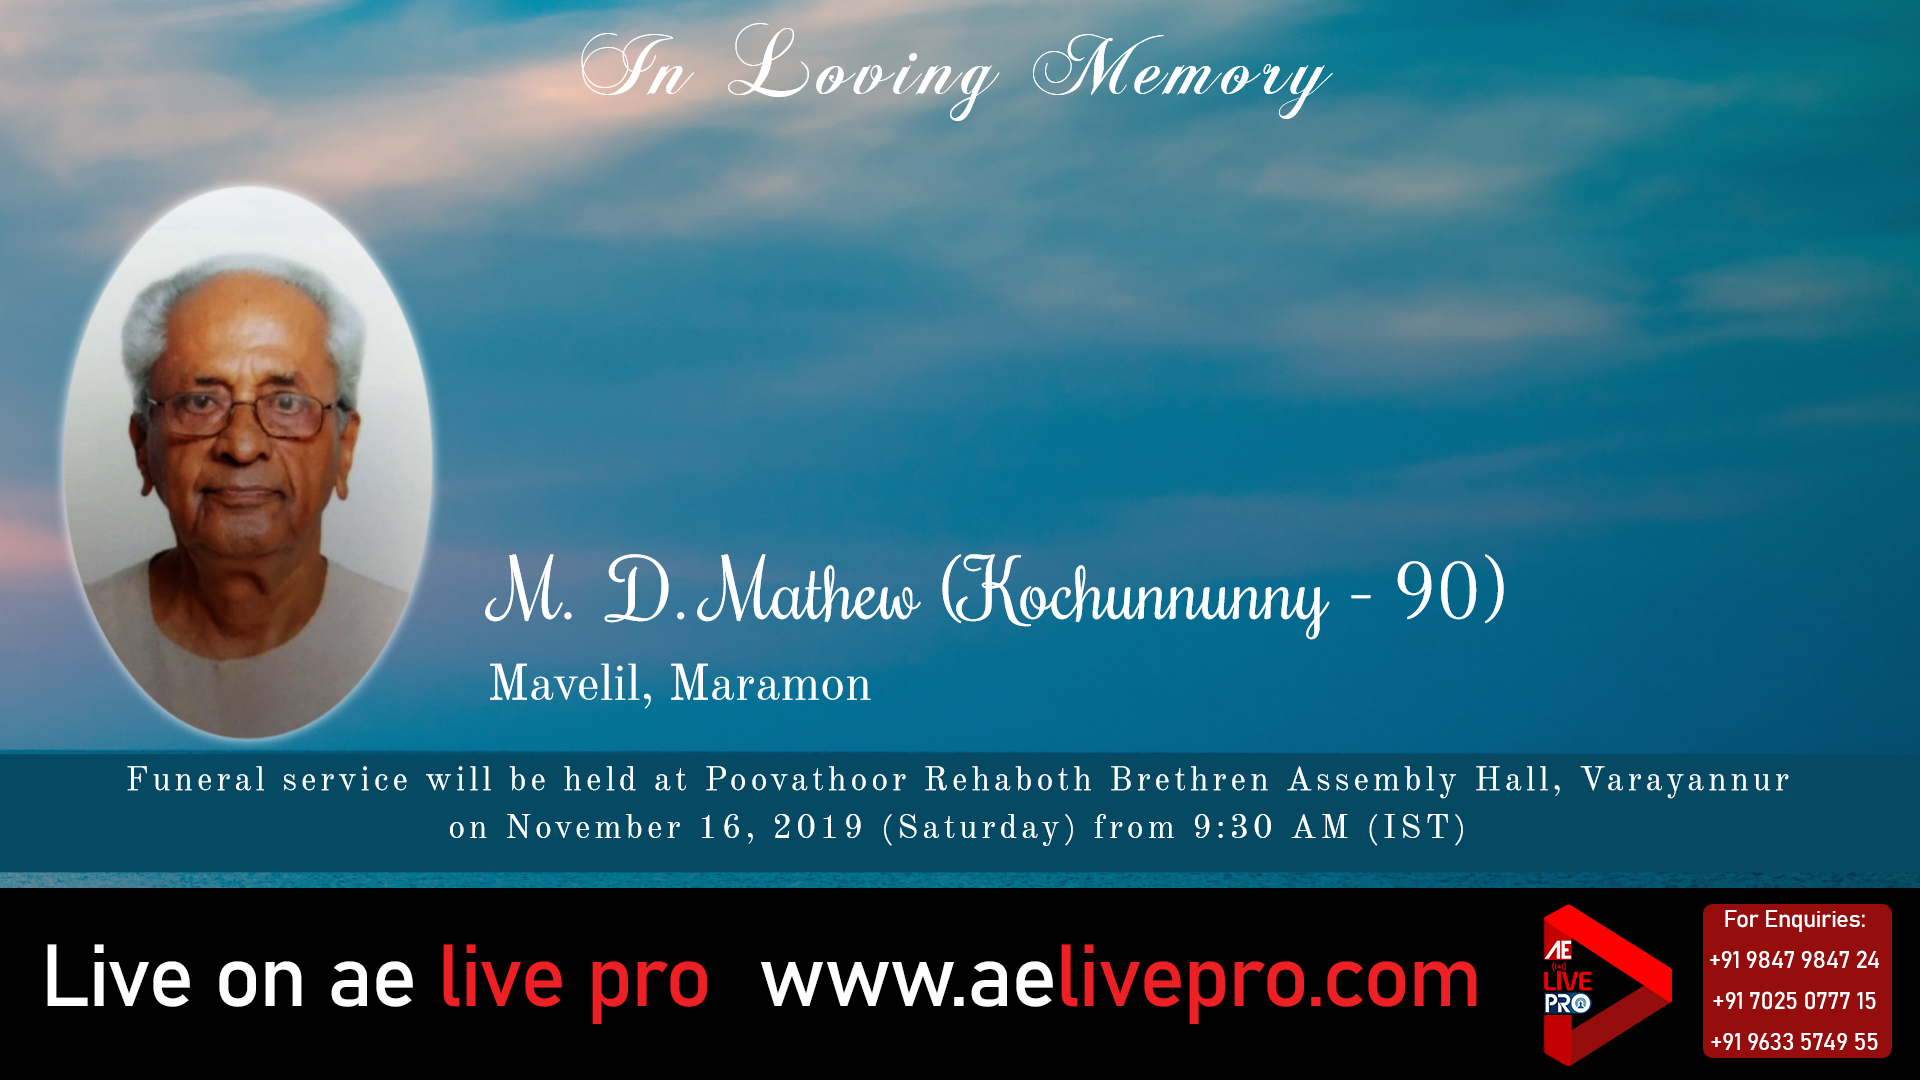 aelivepro funeral live mdmathew maramon